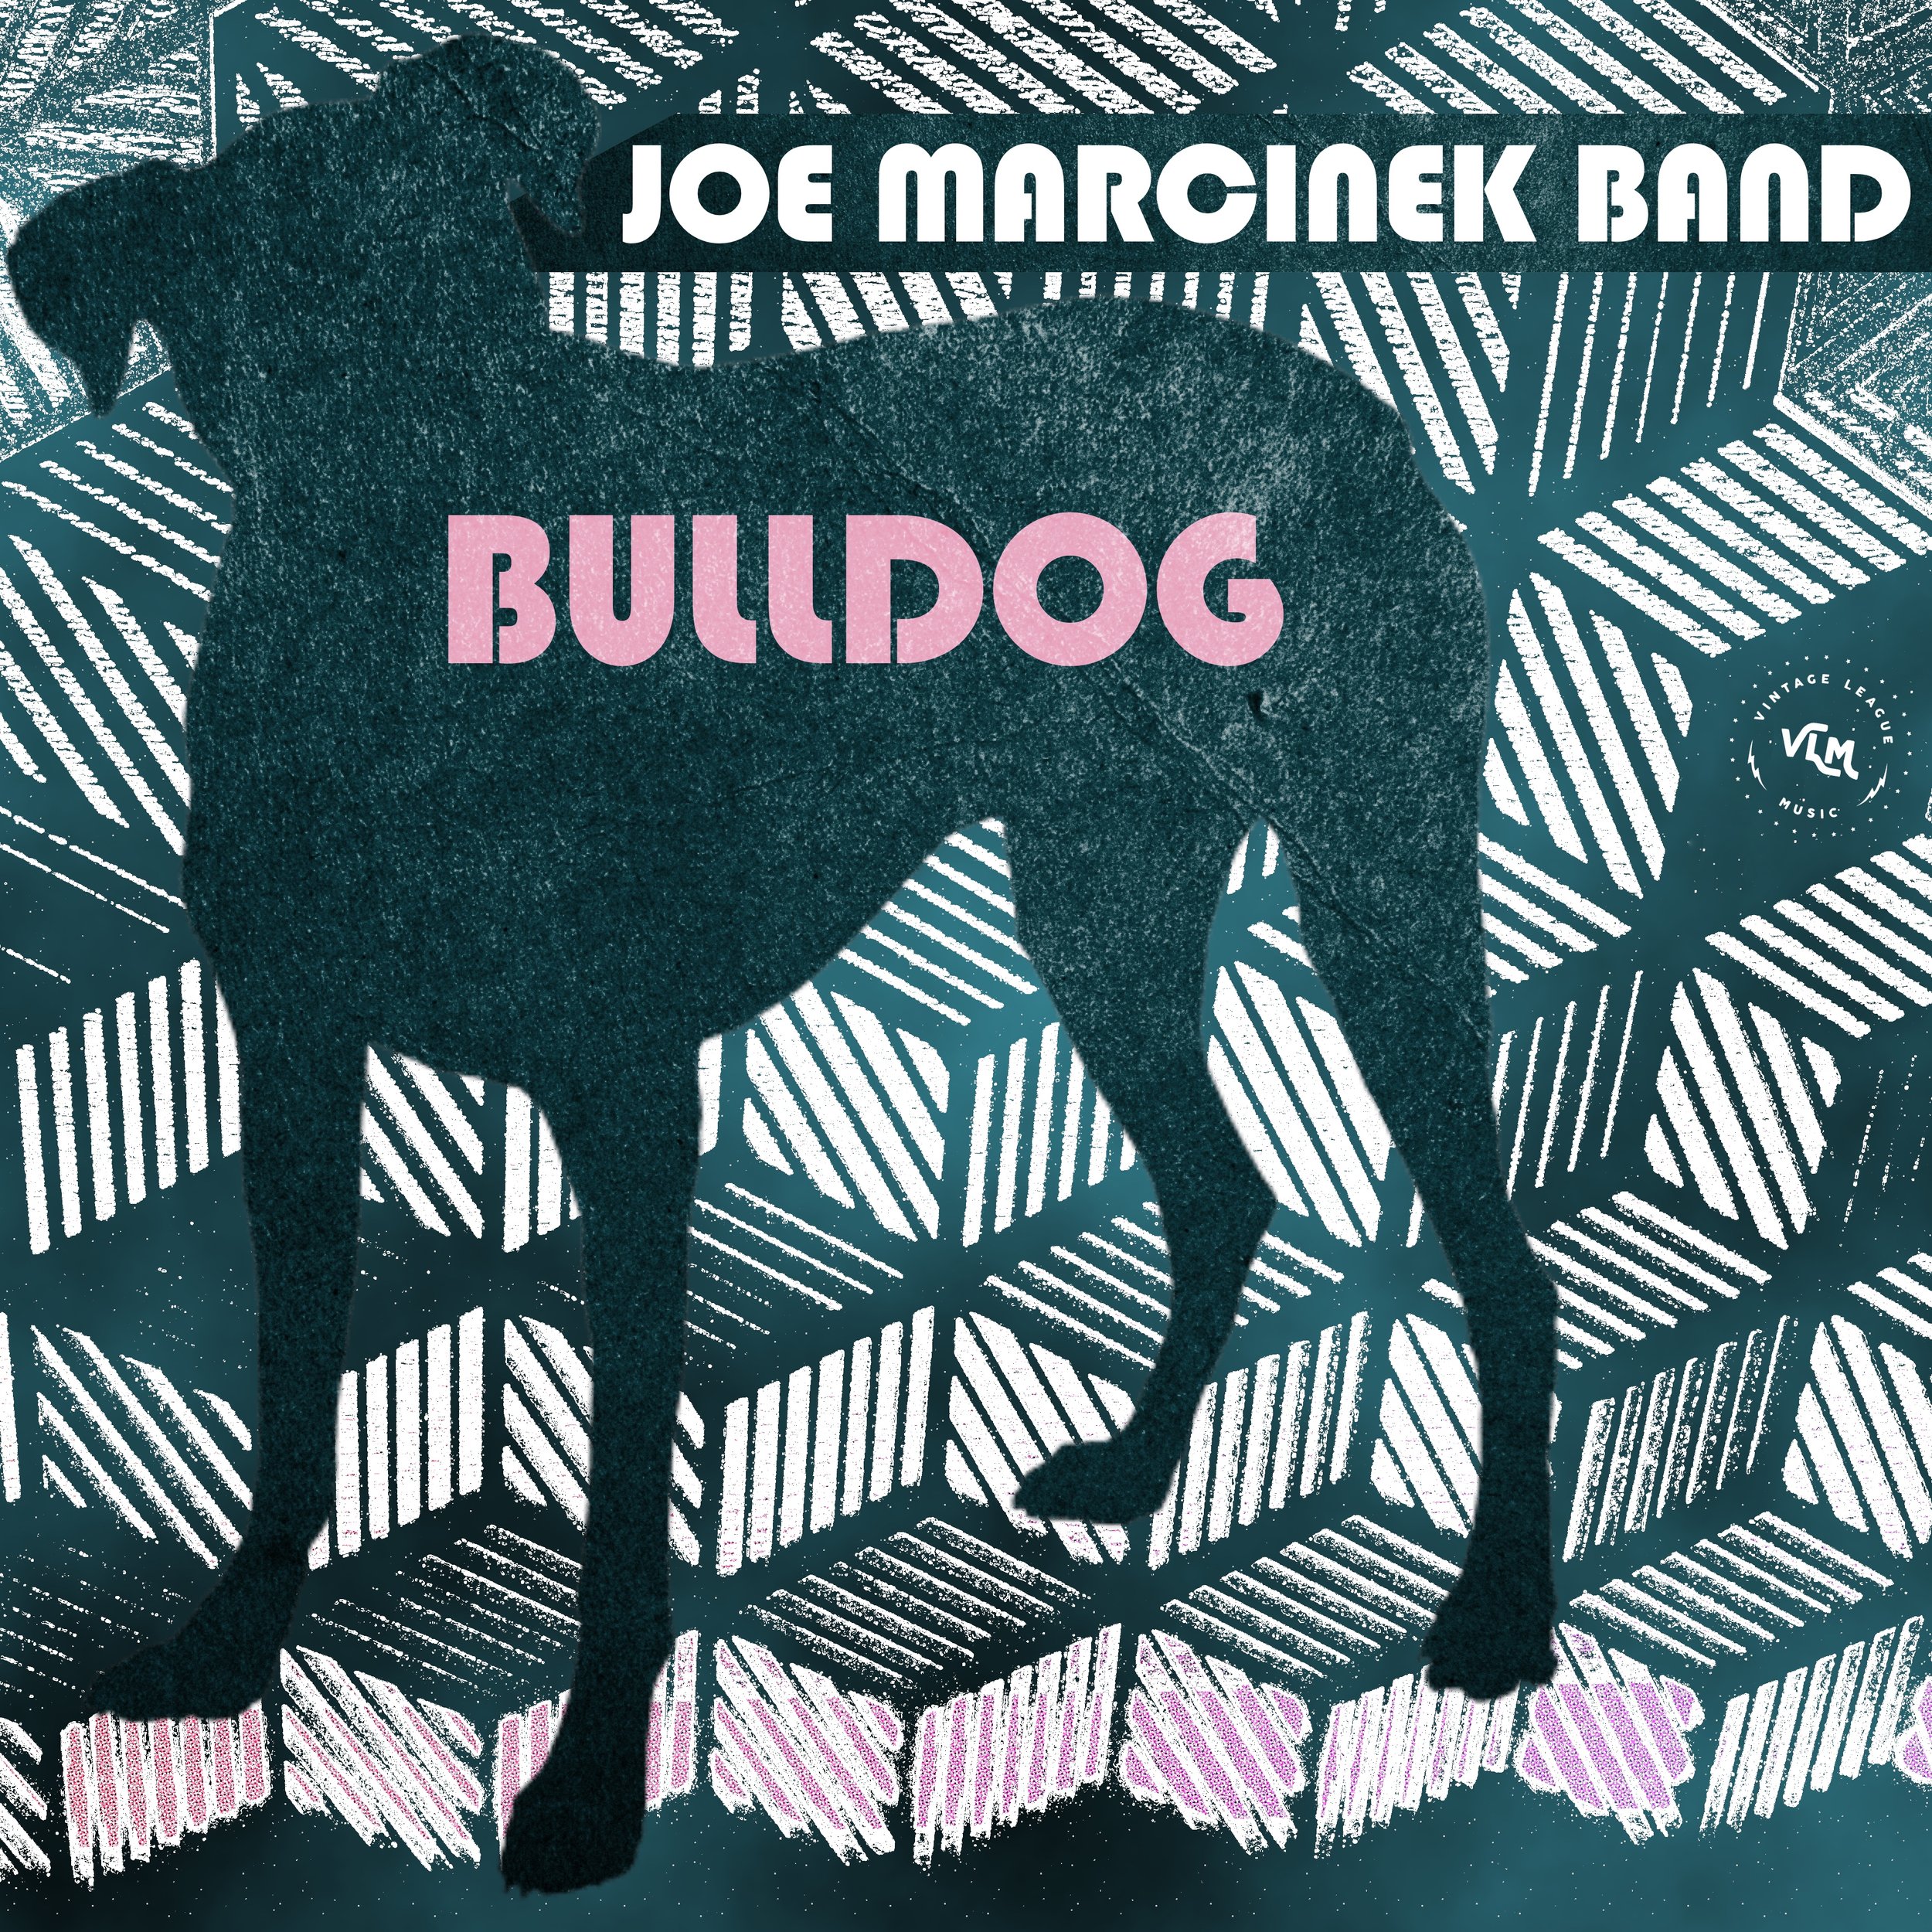 Joe Marcinek Band single art - small.jpg